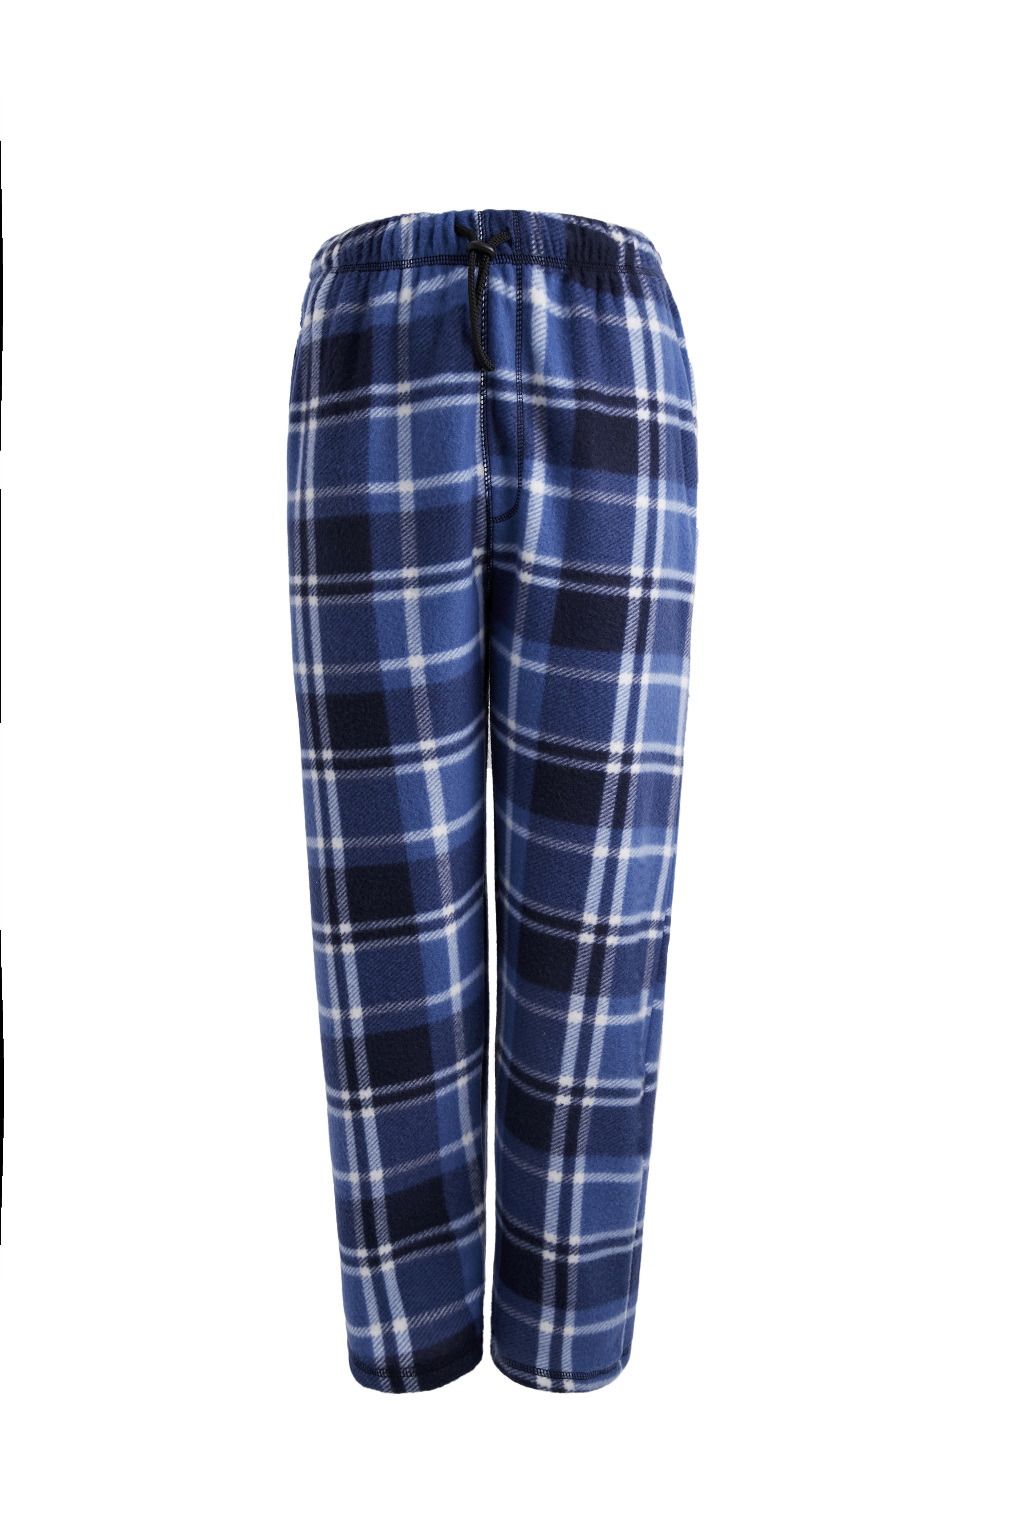 Plaid Pajama Pants - Blue and White – Sorority Intimates & Clothing Company